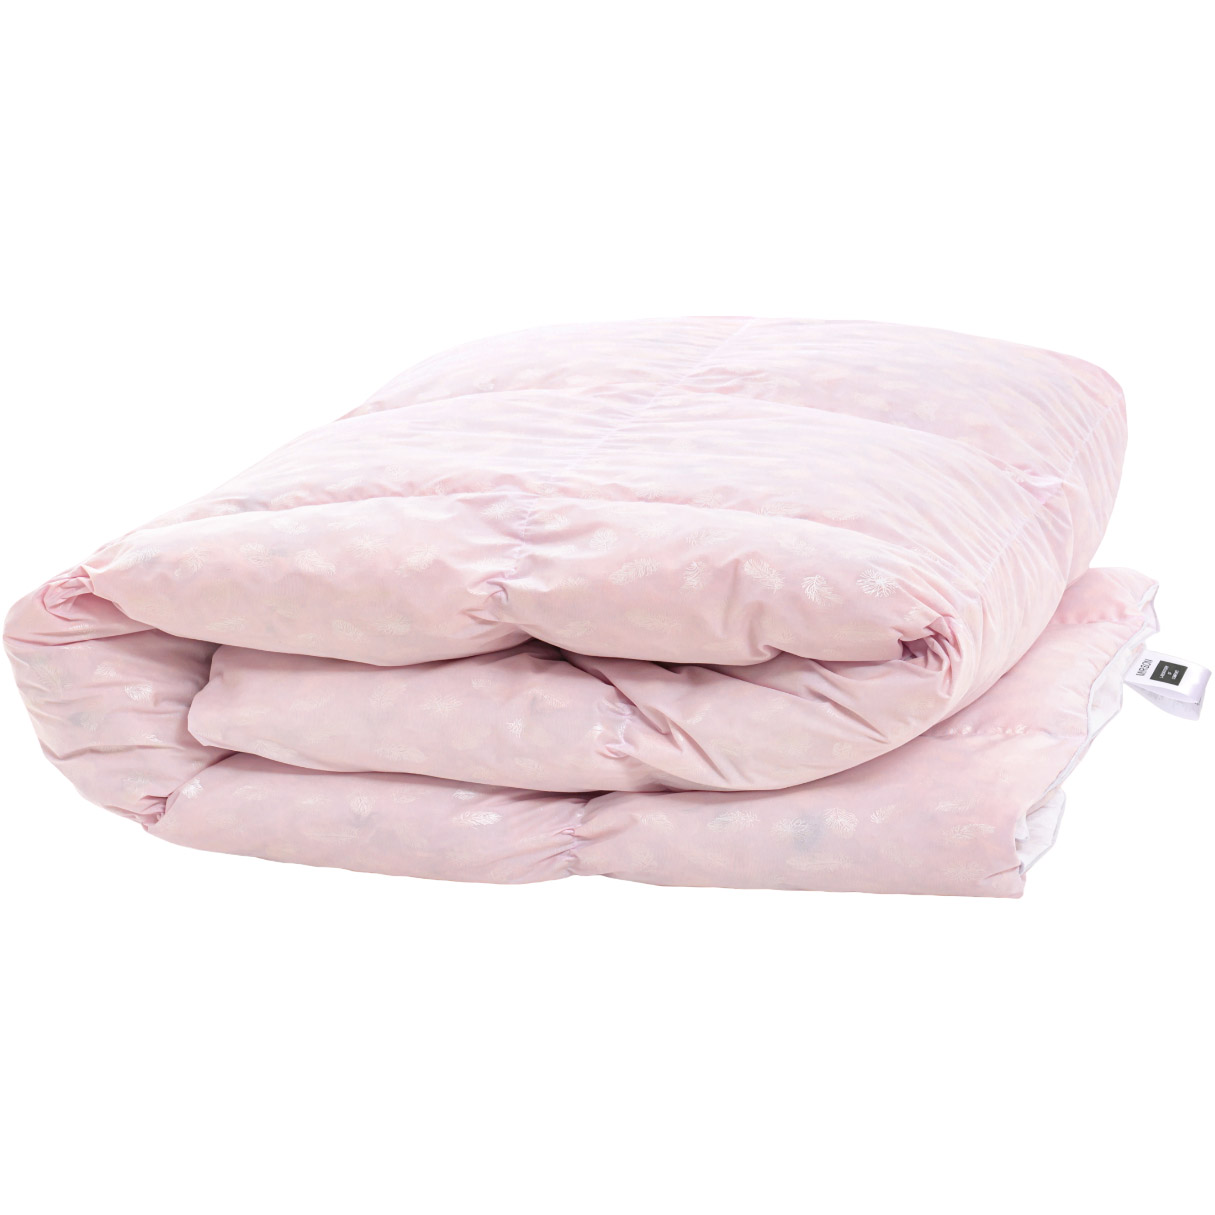 Одеяло пуховое MirSon Karmen №1844 Bio-Pink, 50% пух, 110x140 см, розовое (2200003013375) - фото 1